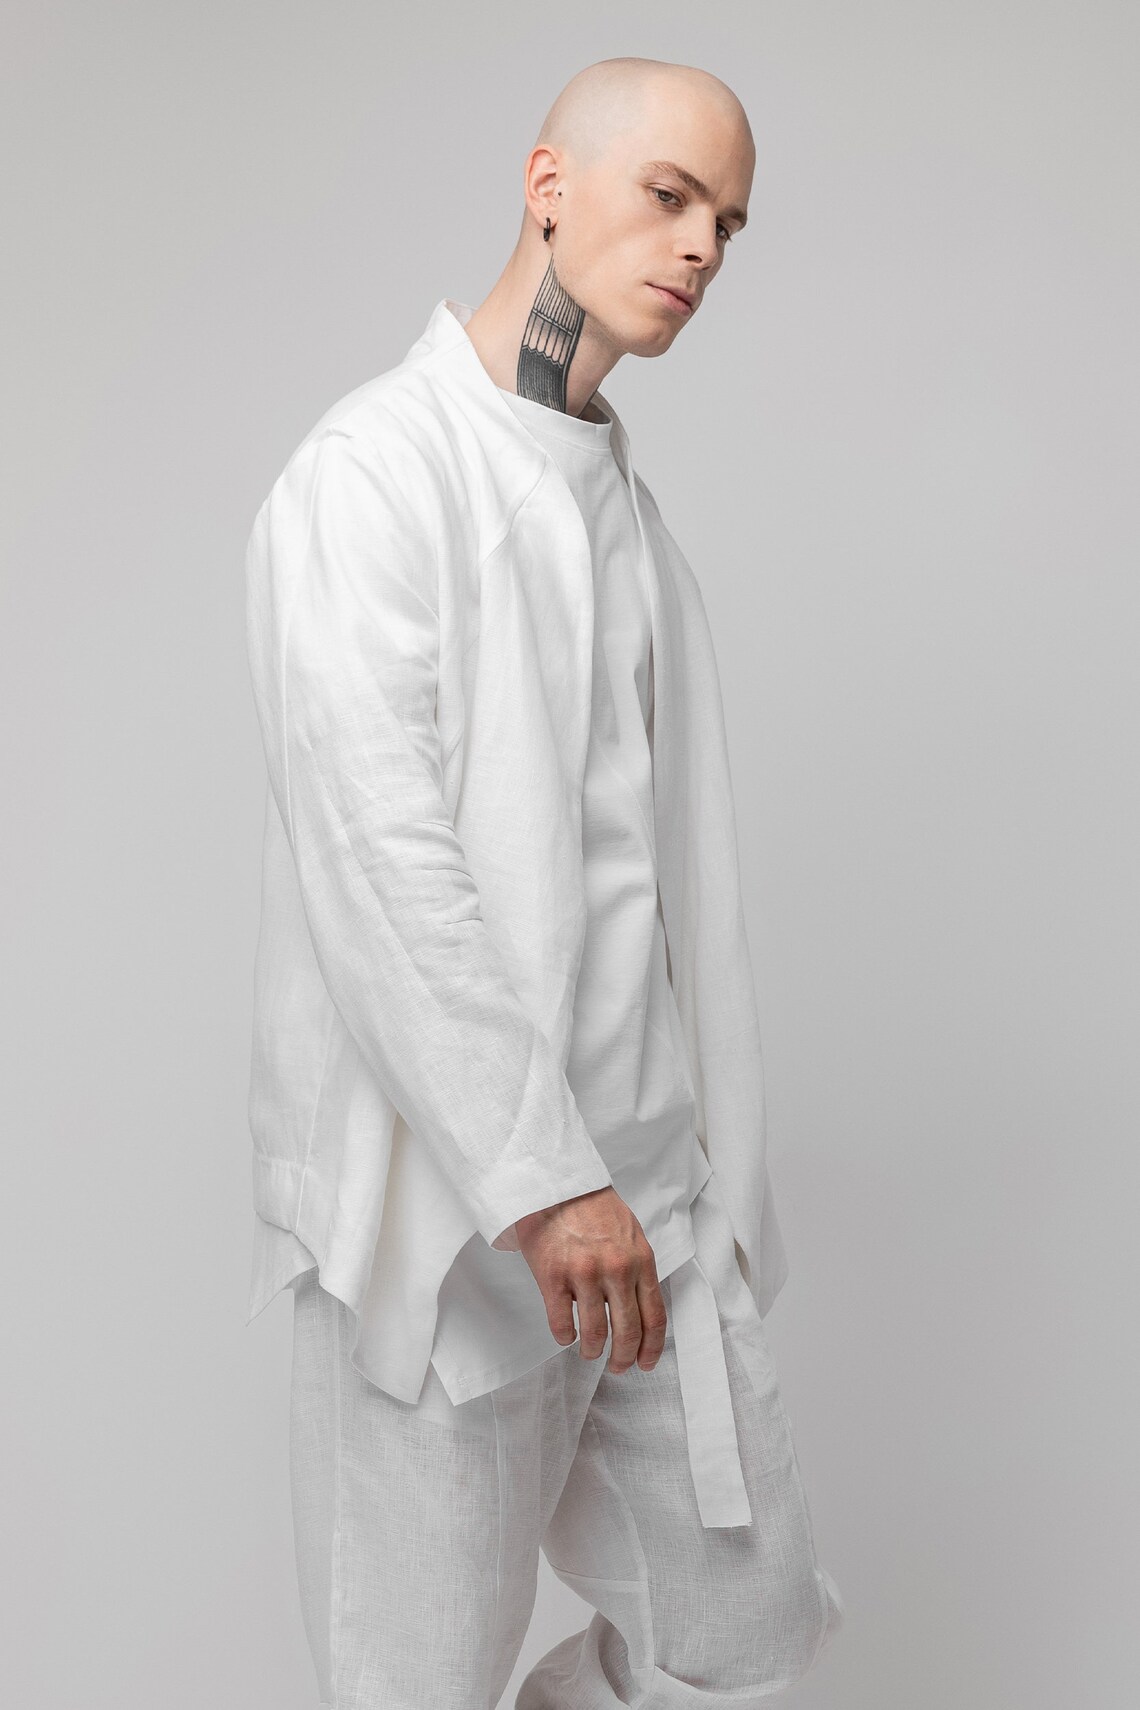 White linen jacket mens futuristic cardigan sci-fi classic | Etsy